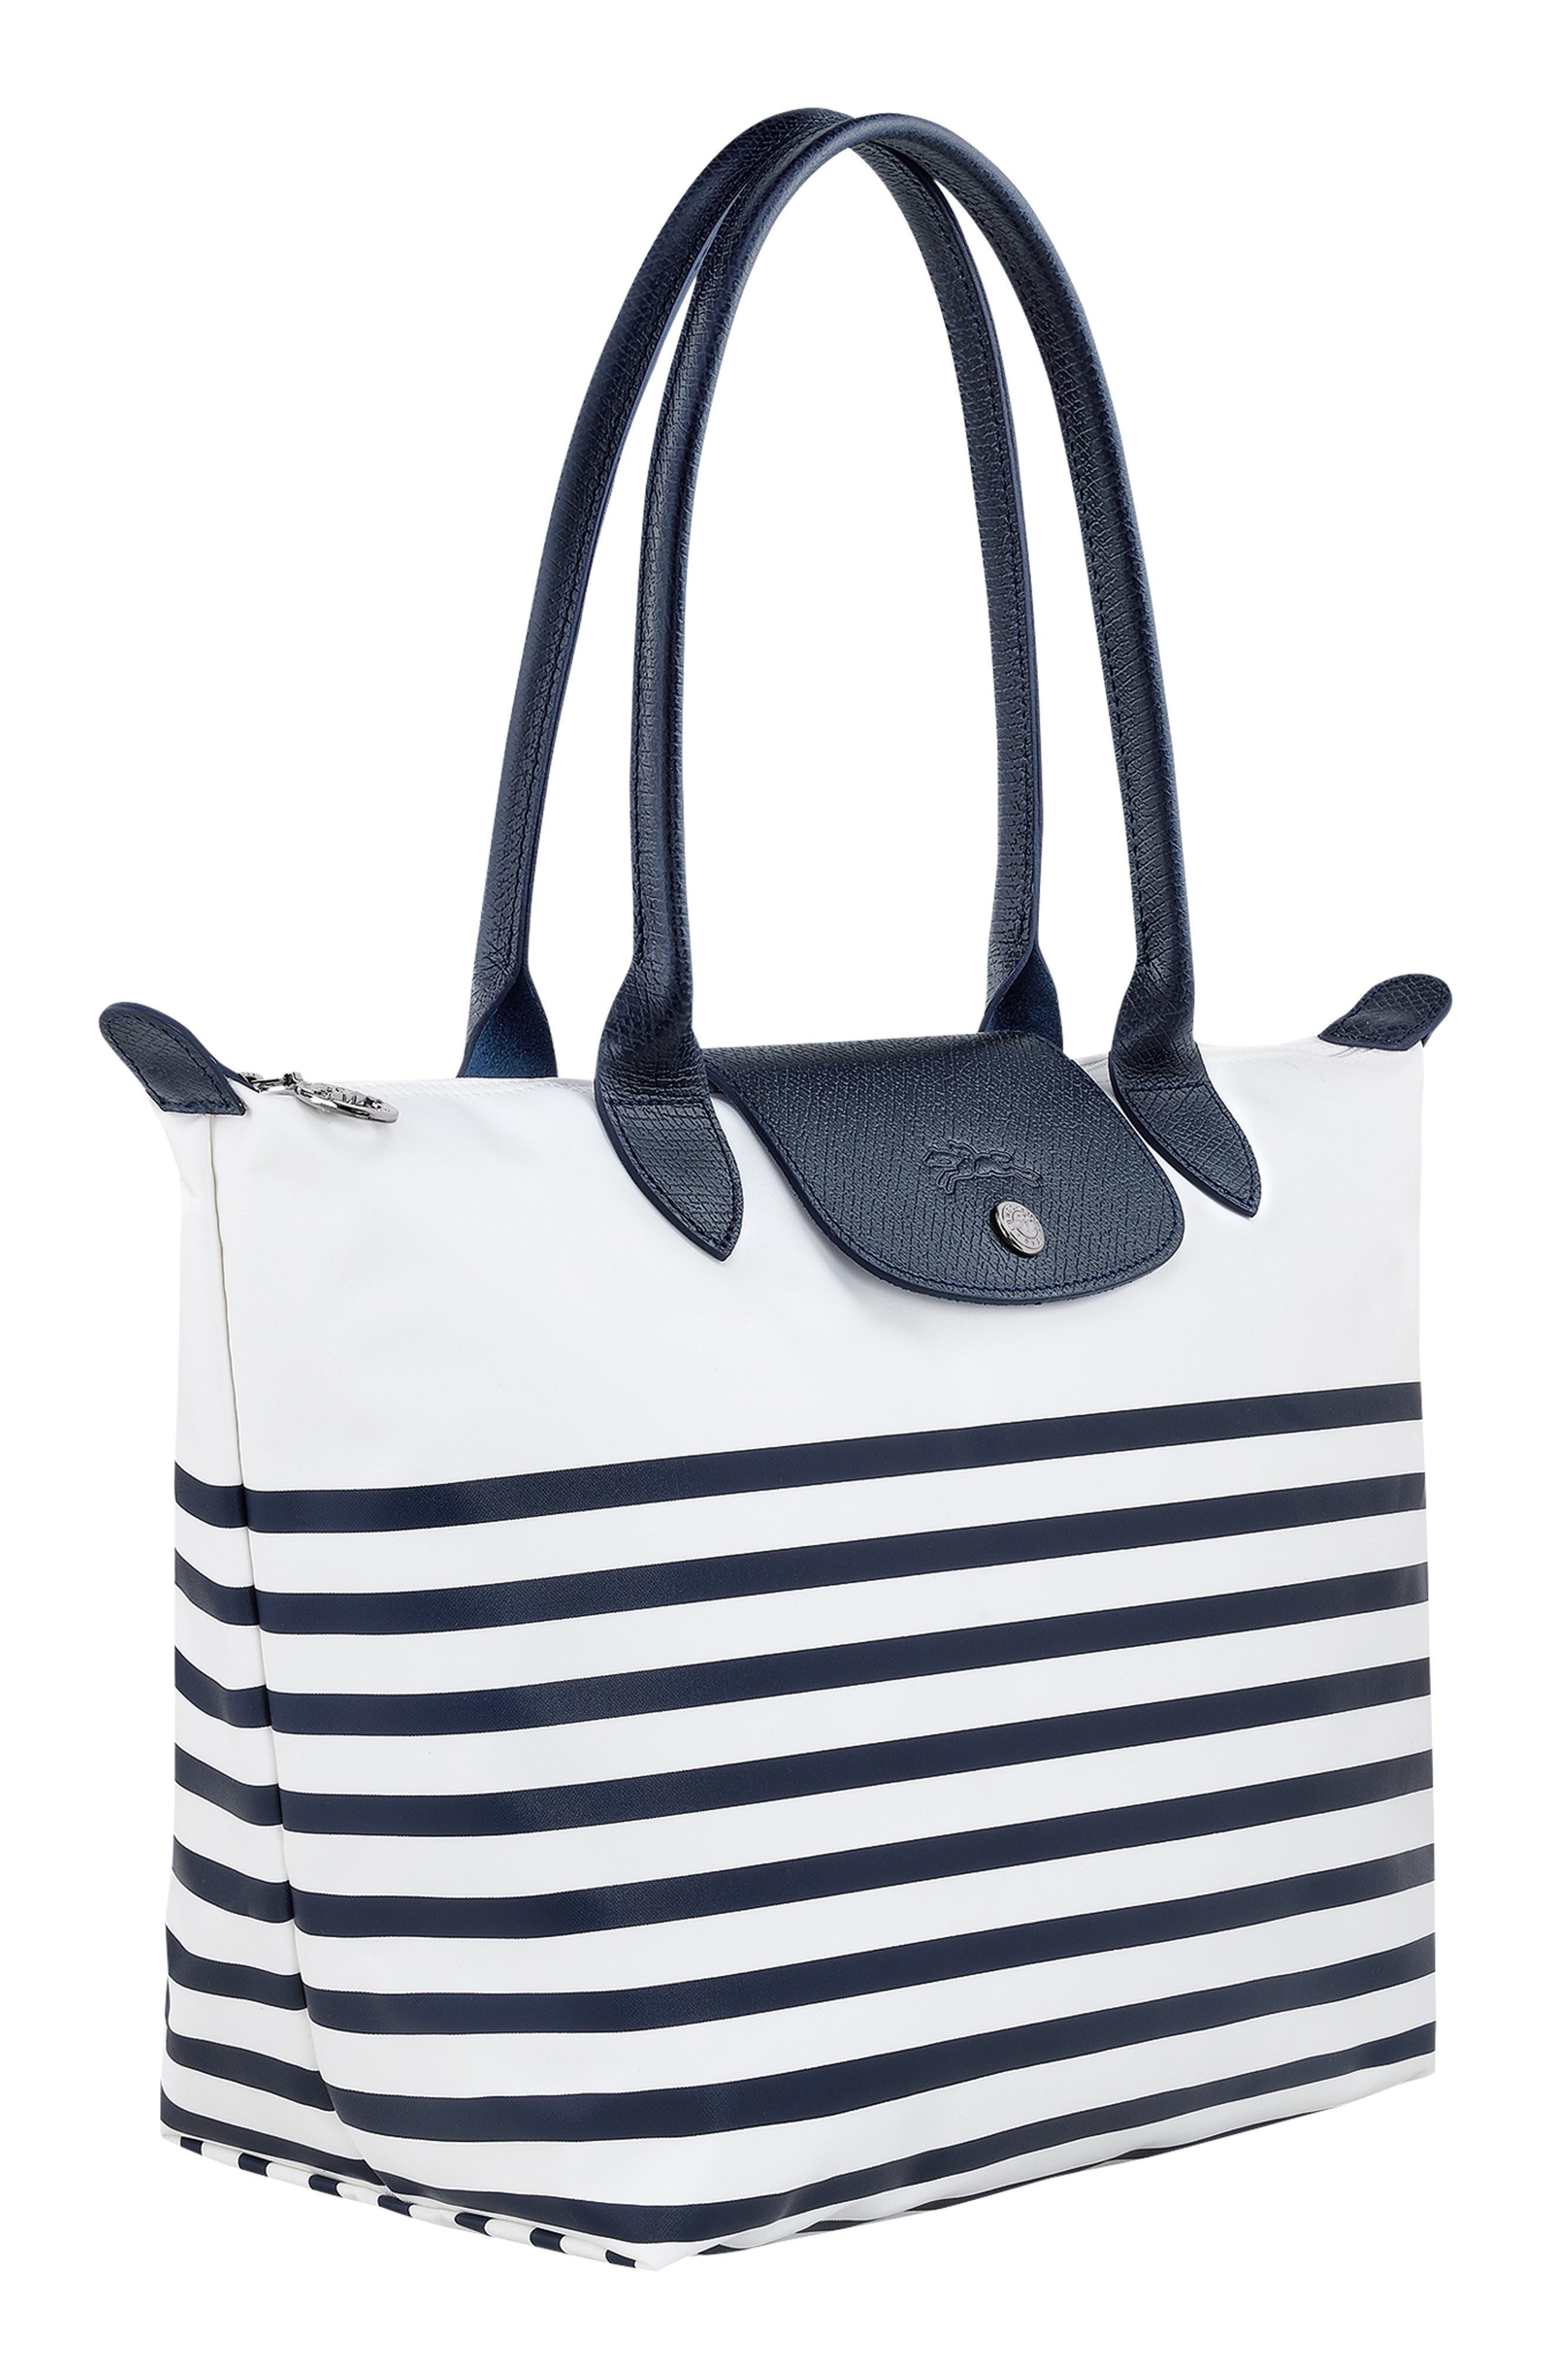 Longchamp Women's Le Pliage Sac Shopping Small Shoulder Bag, Black:  Handbags